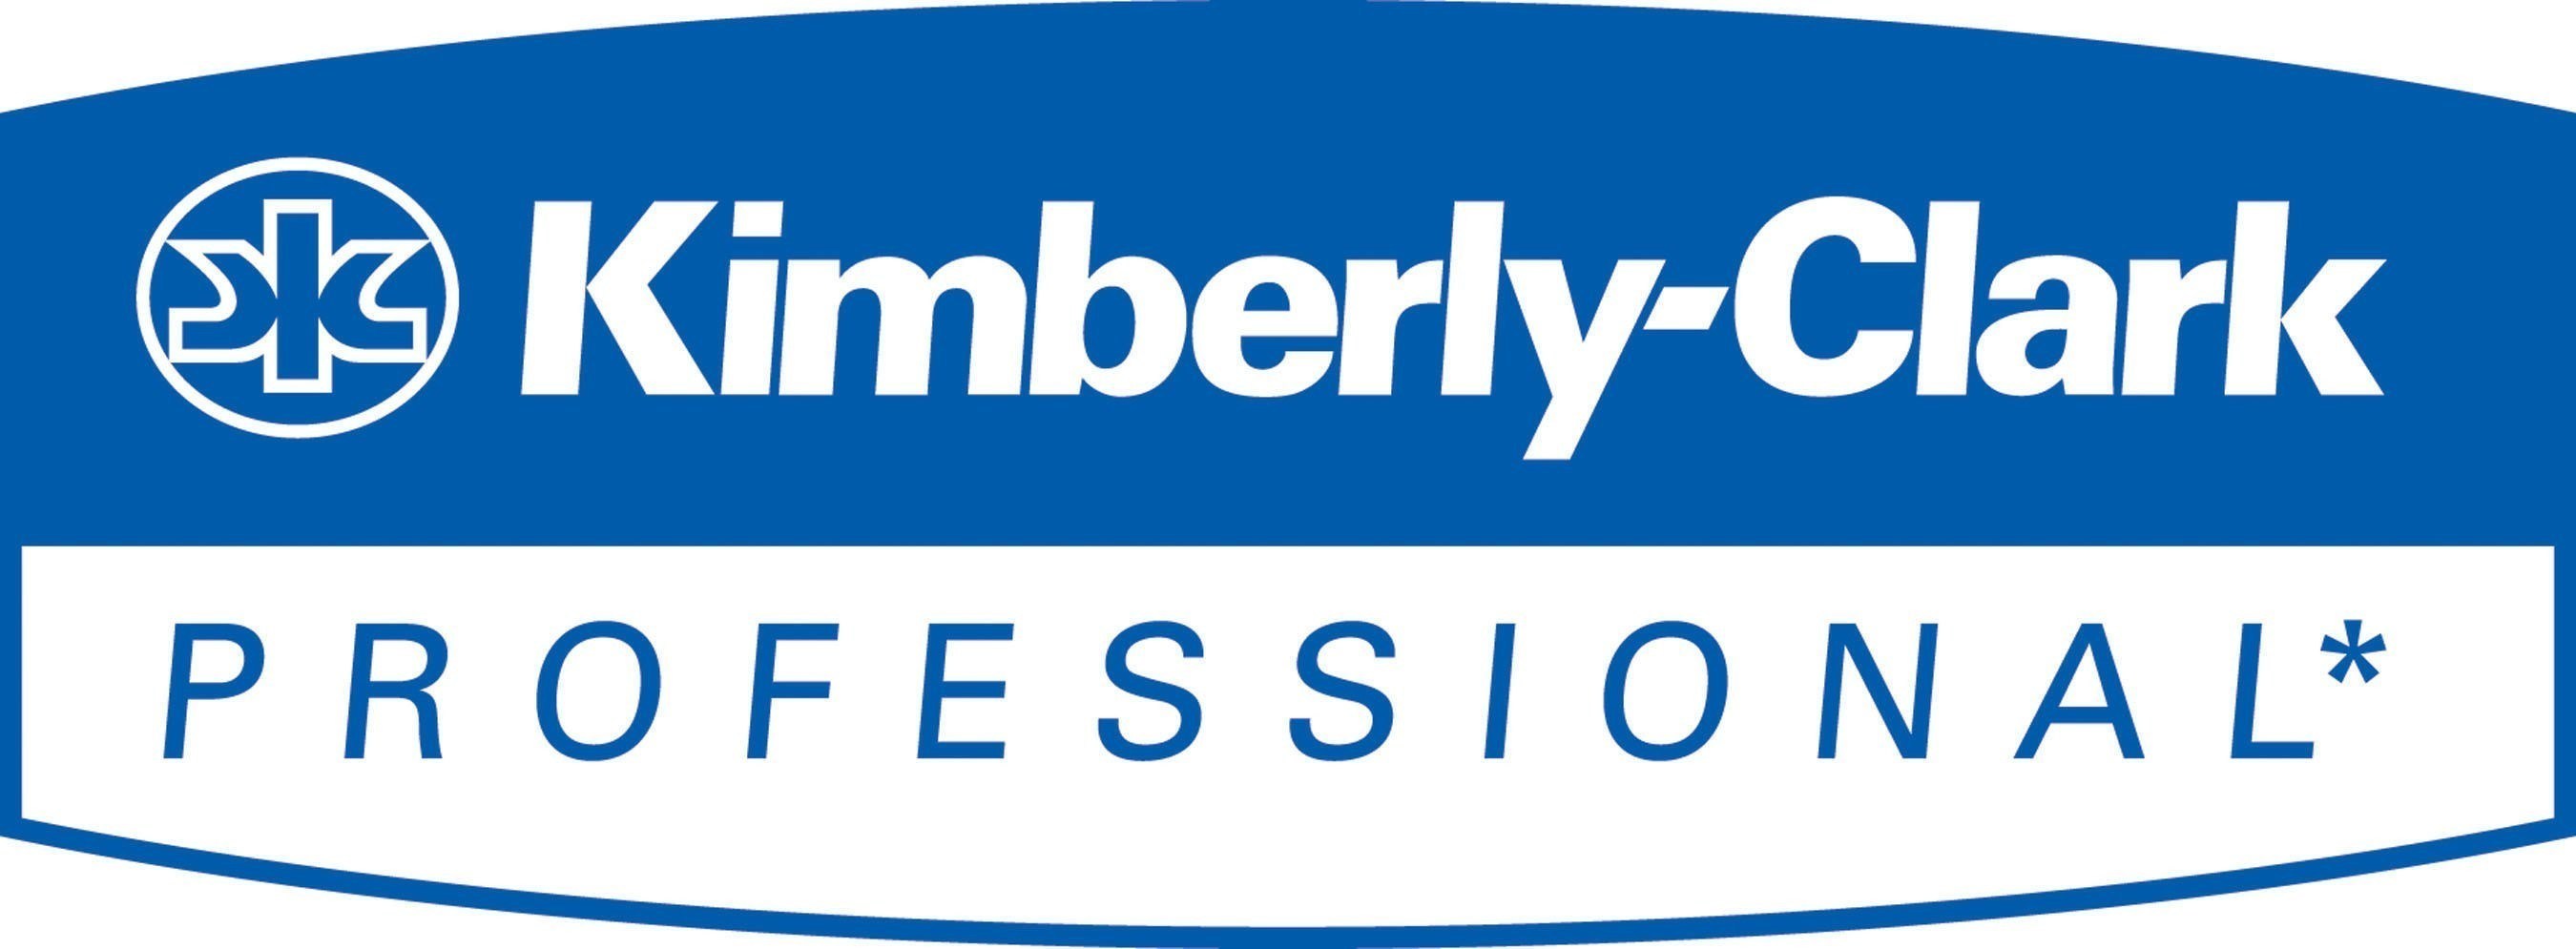 Kimberly-Clark Professional Logo. (PRNewsFoto/Kimberly-Clark Corporation) (PRNewsFoto/Kimberly-Clark Corporation)